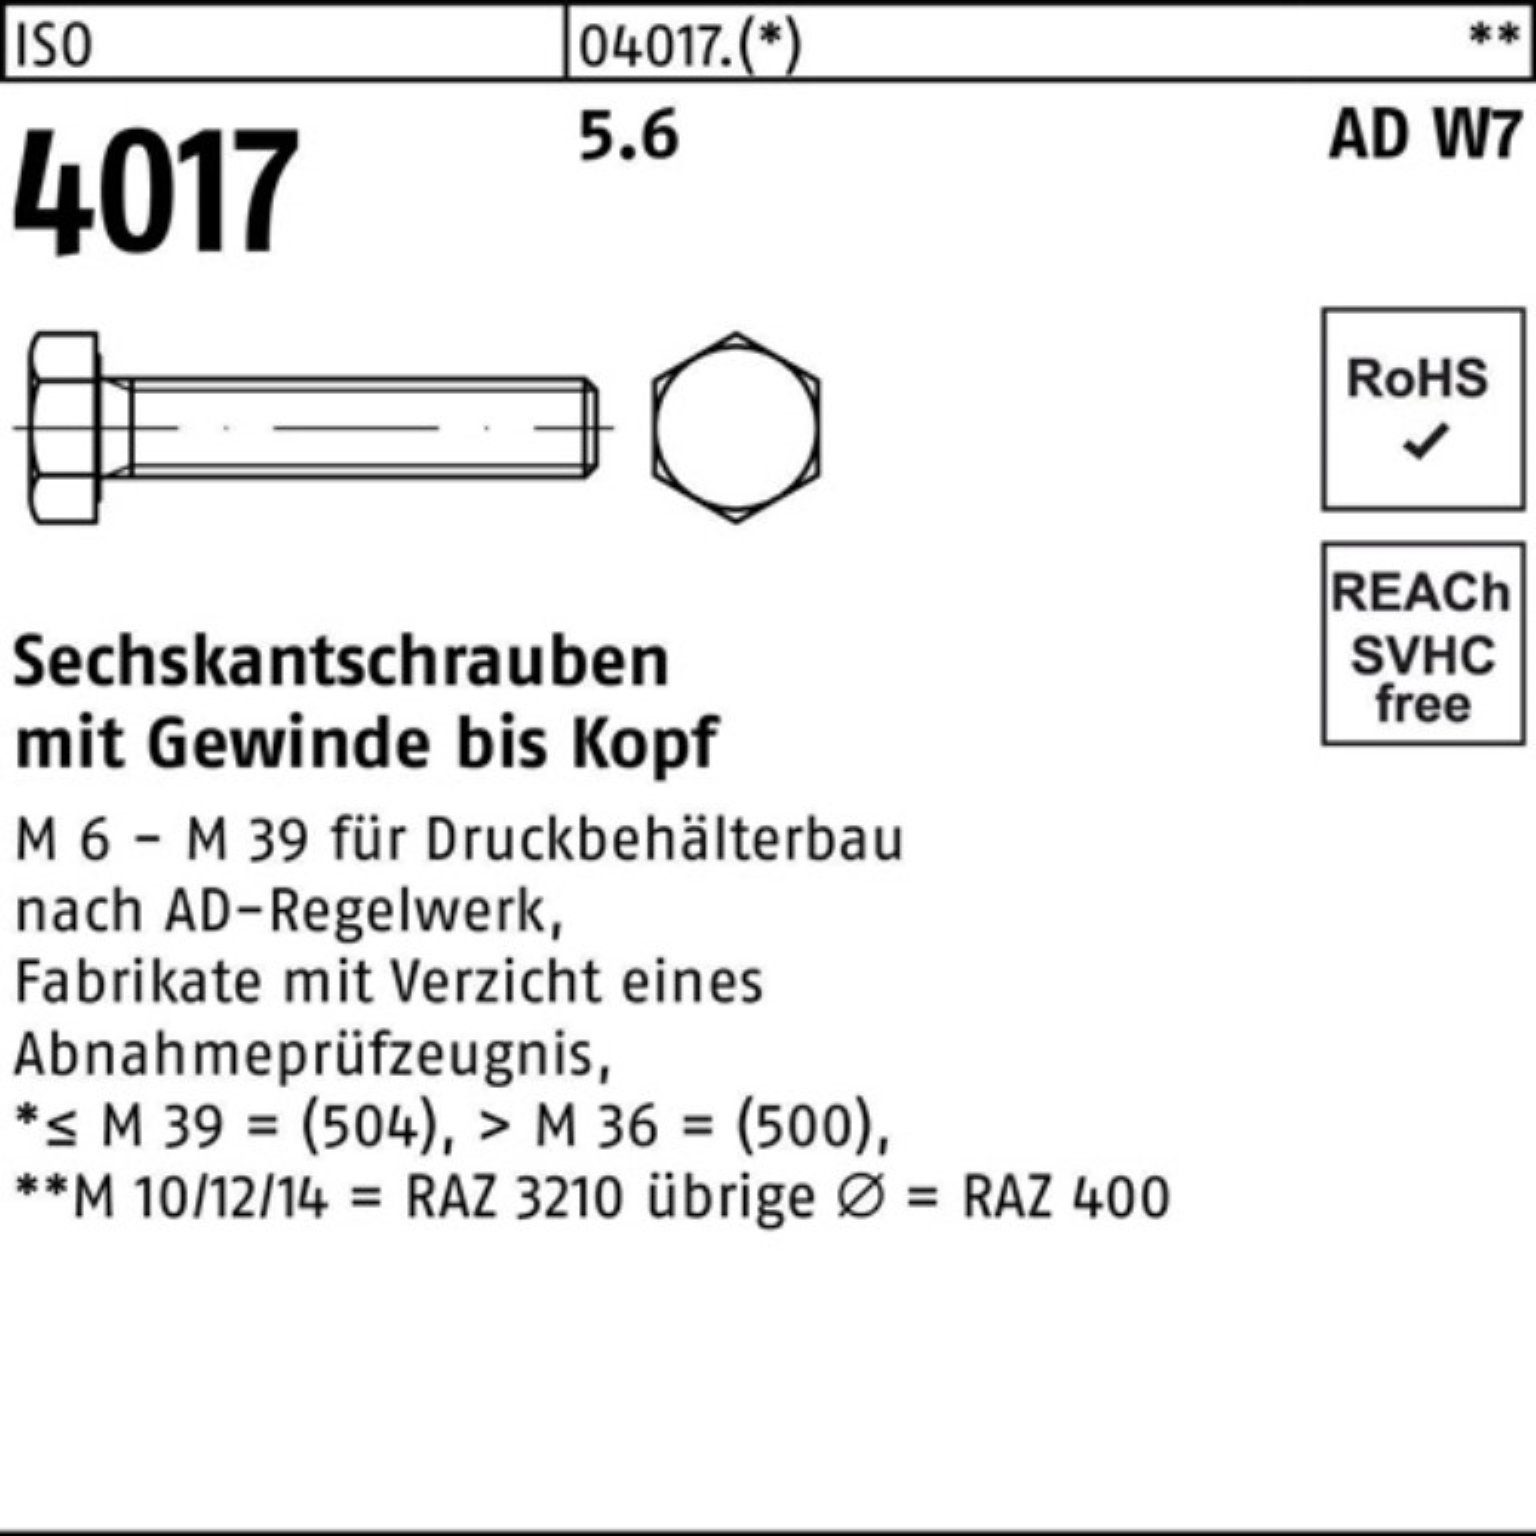 Bufab Sechskantschraube M20x 4017 Stück Sechskantschraube VG Pack W7 100er 25 AD 55 I 5.6 ISO